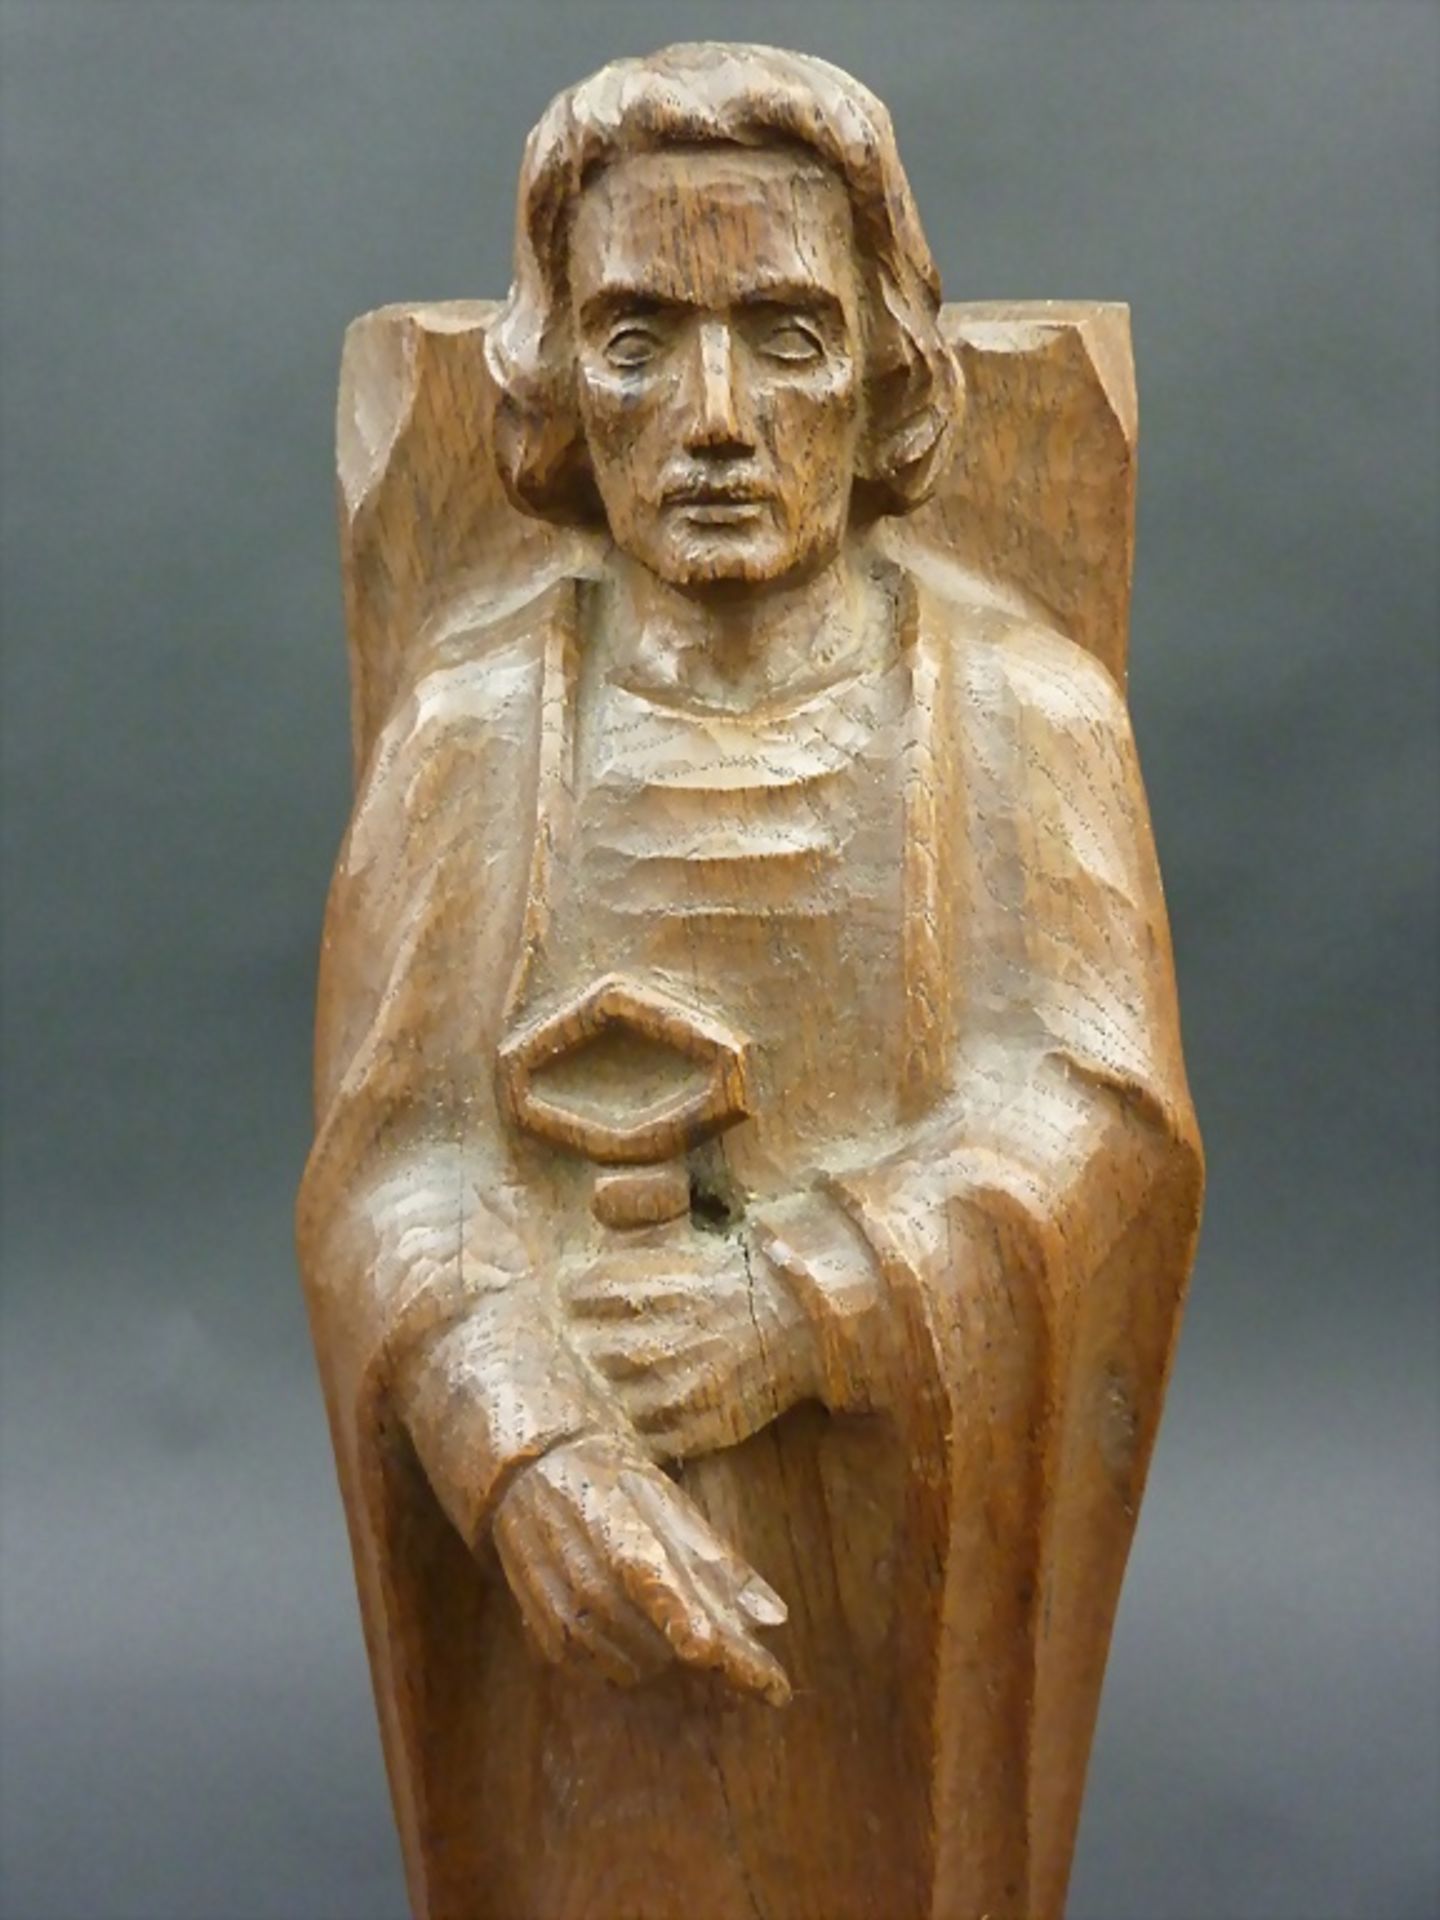 Holz-Skulptur 'Heiliger Apostel Petrus - Der Fels' / Wooden sculpture 'Holy Apostle Peter - ... - Image 5 of 12